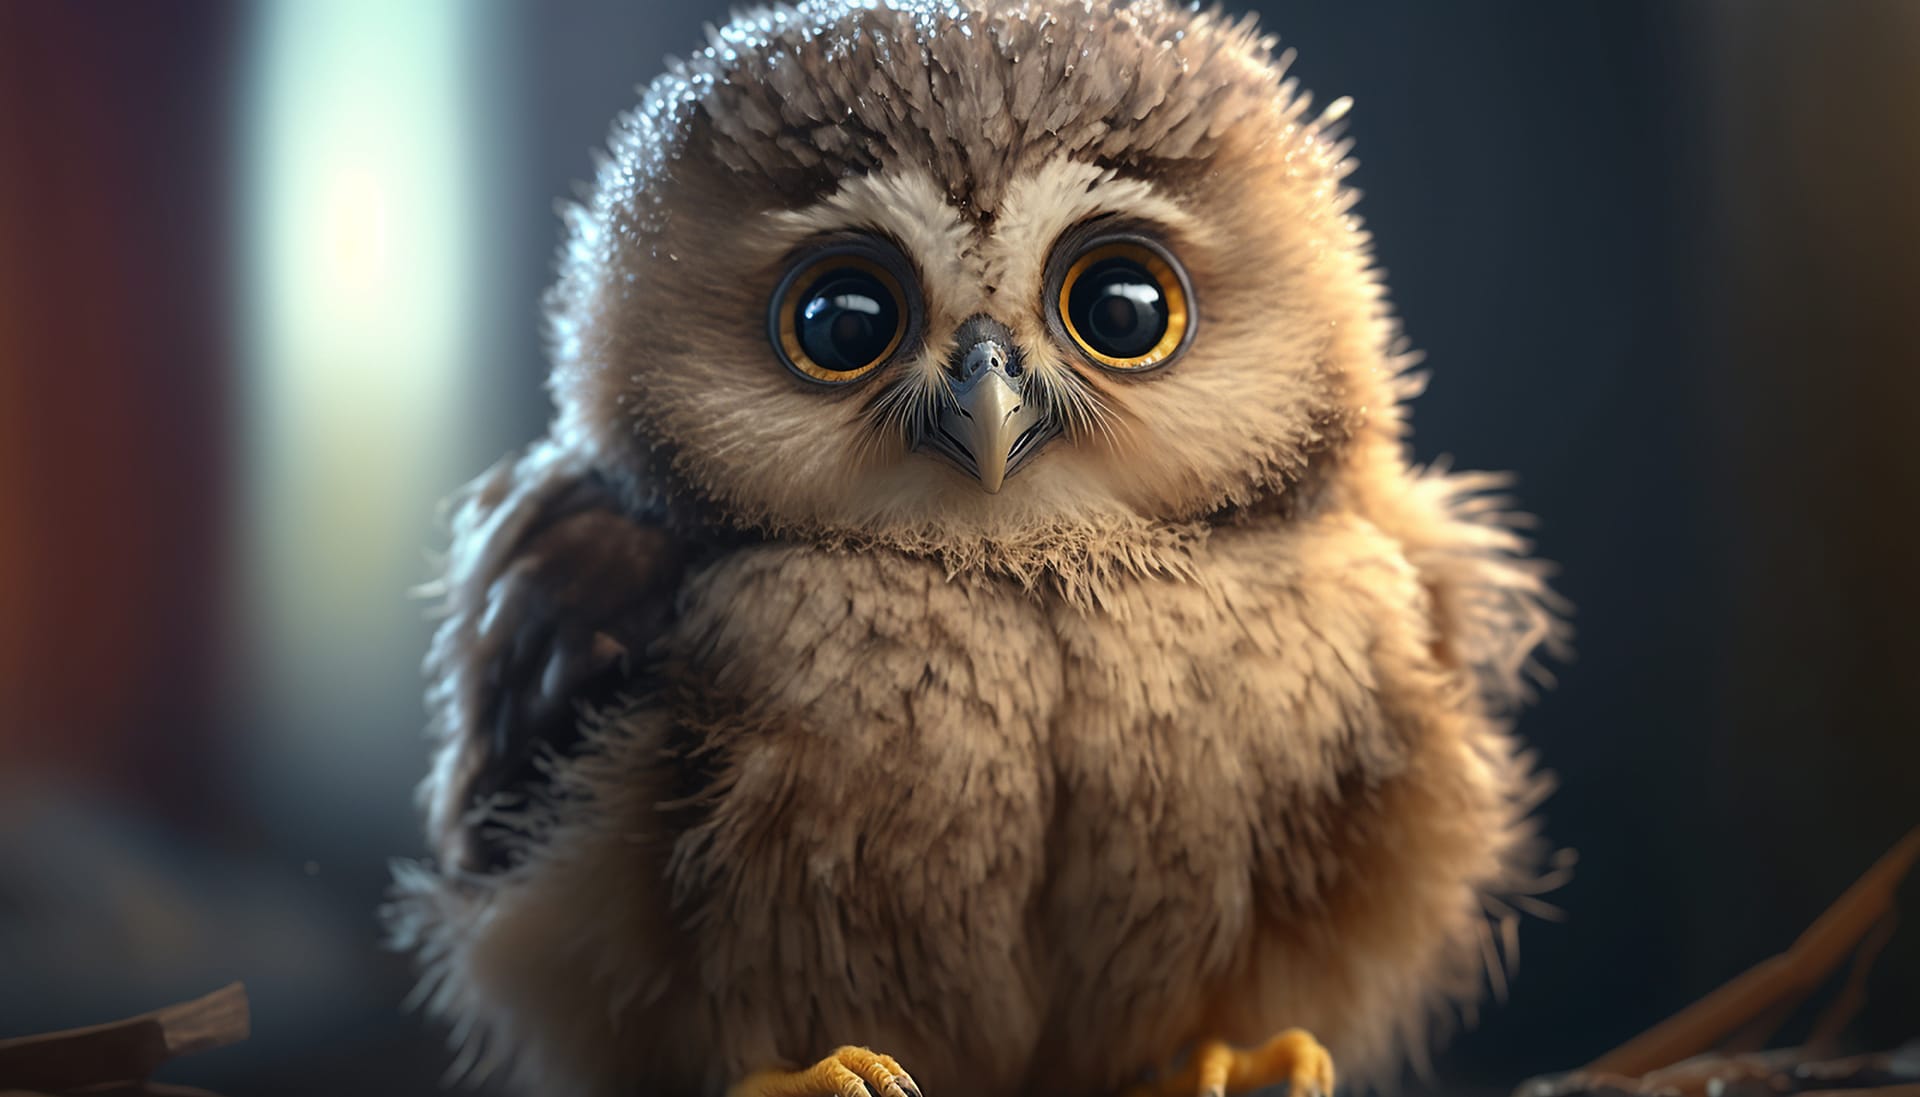 Cute adorable baby owl image art